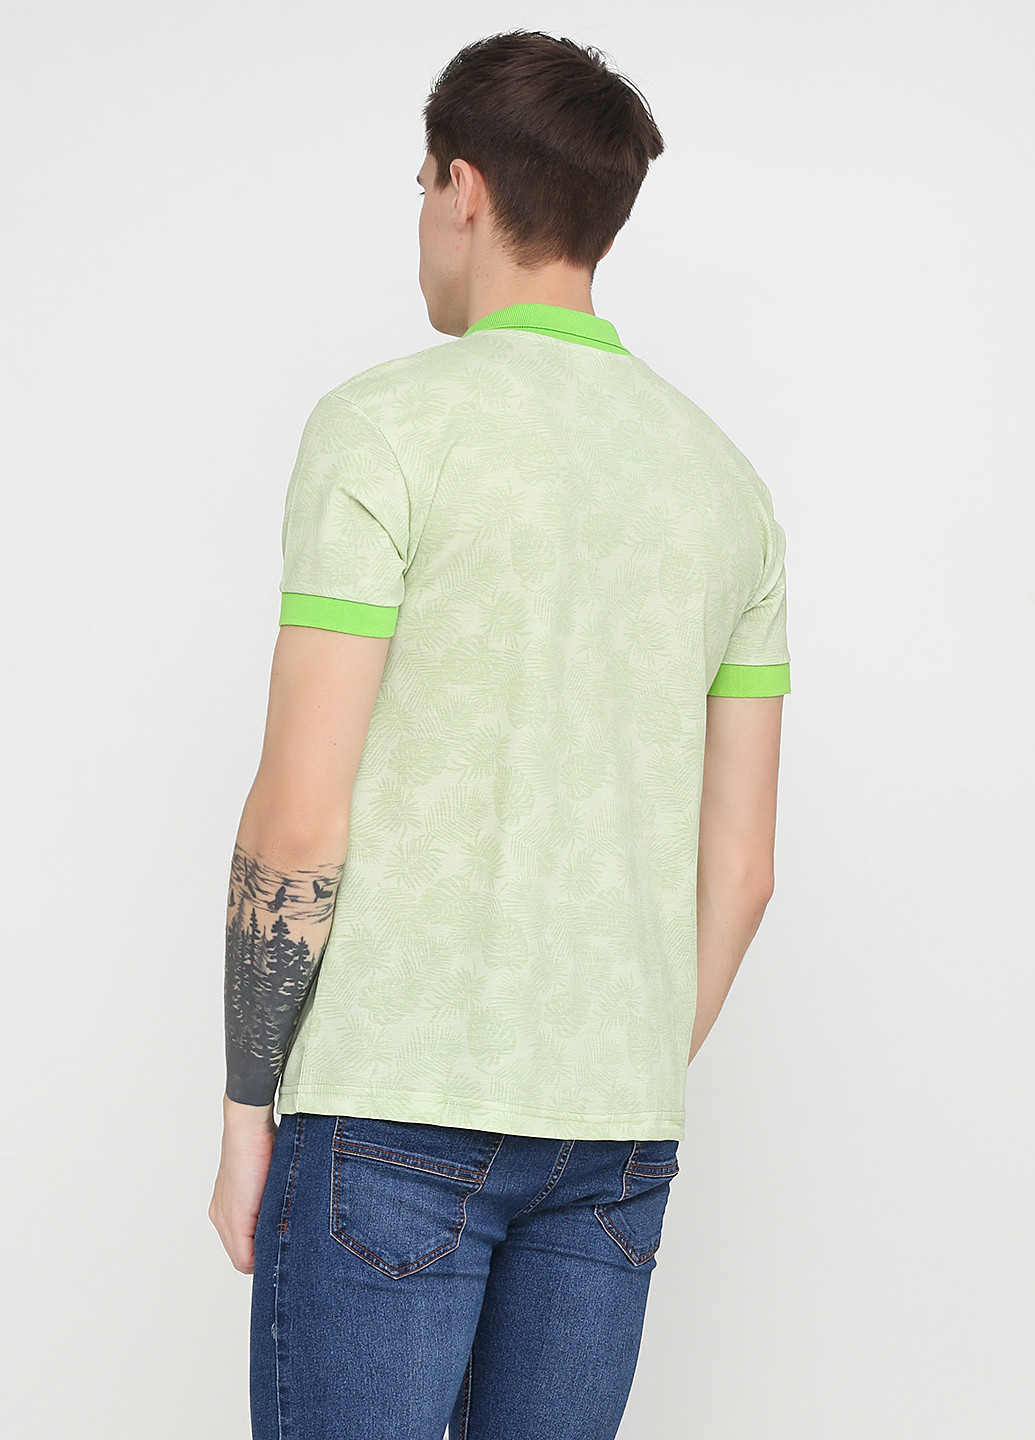 Салатовая футболка-поло для мужчин Chiarotex с рисунком